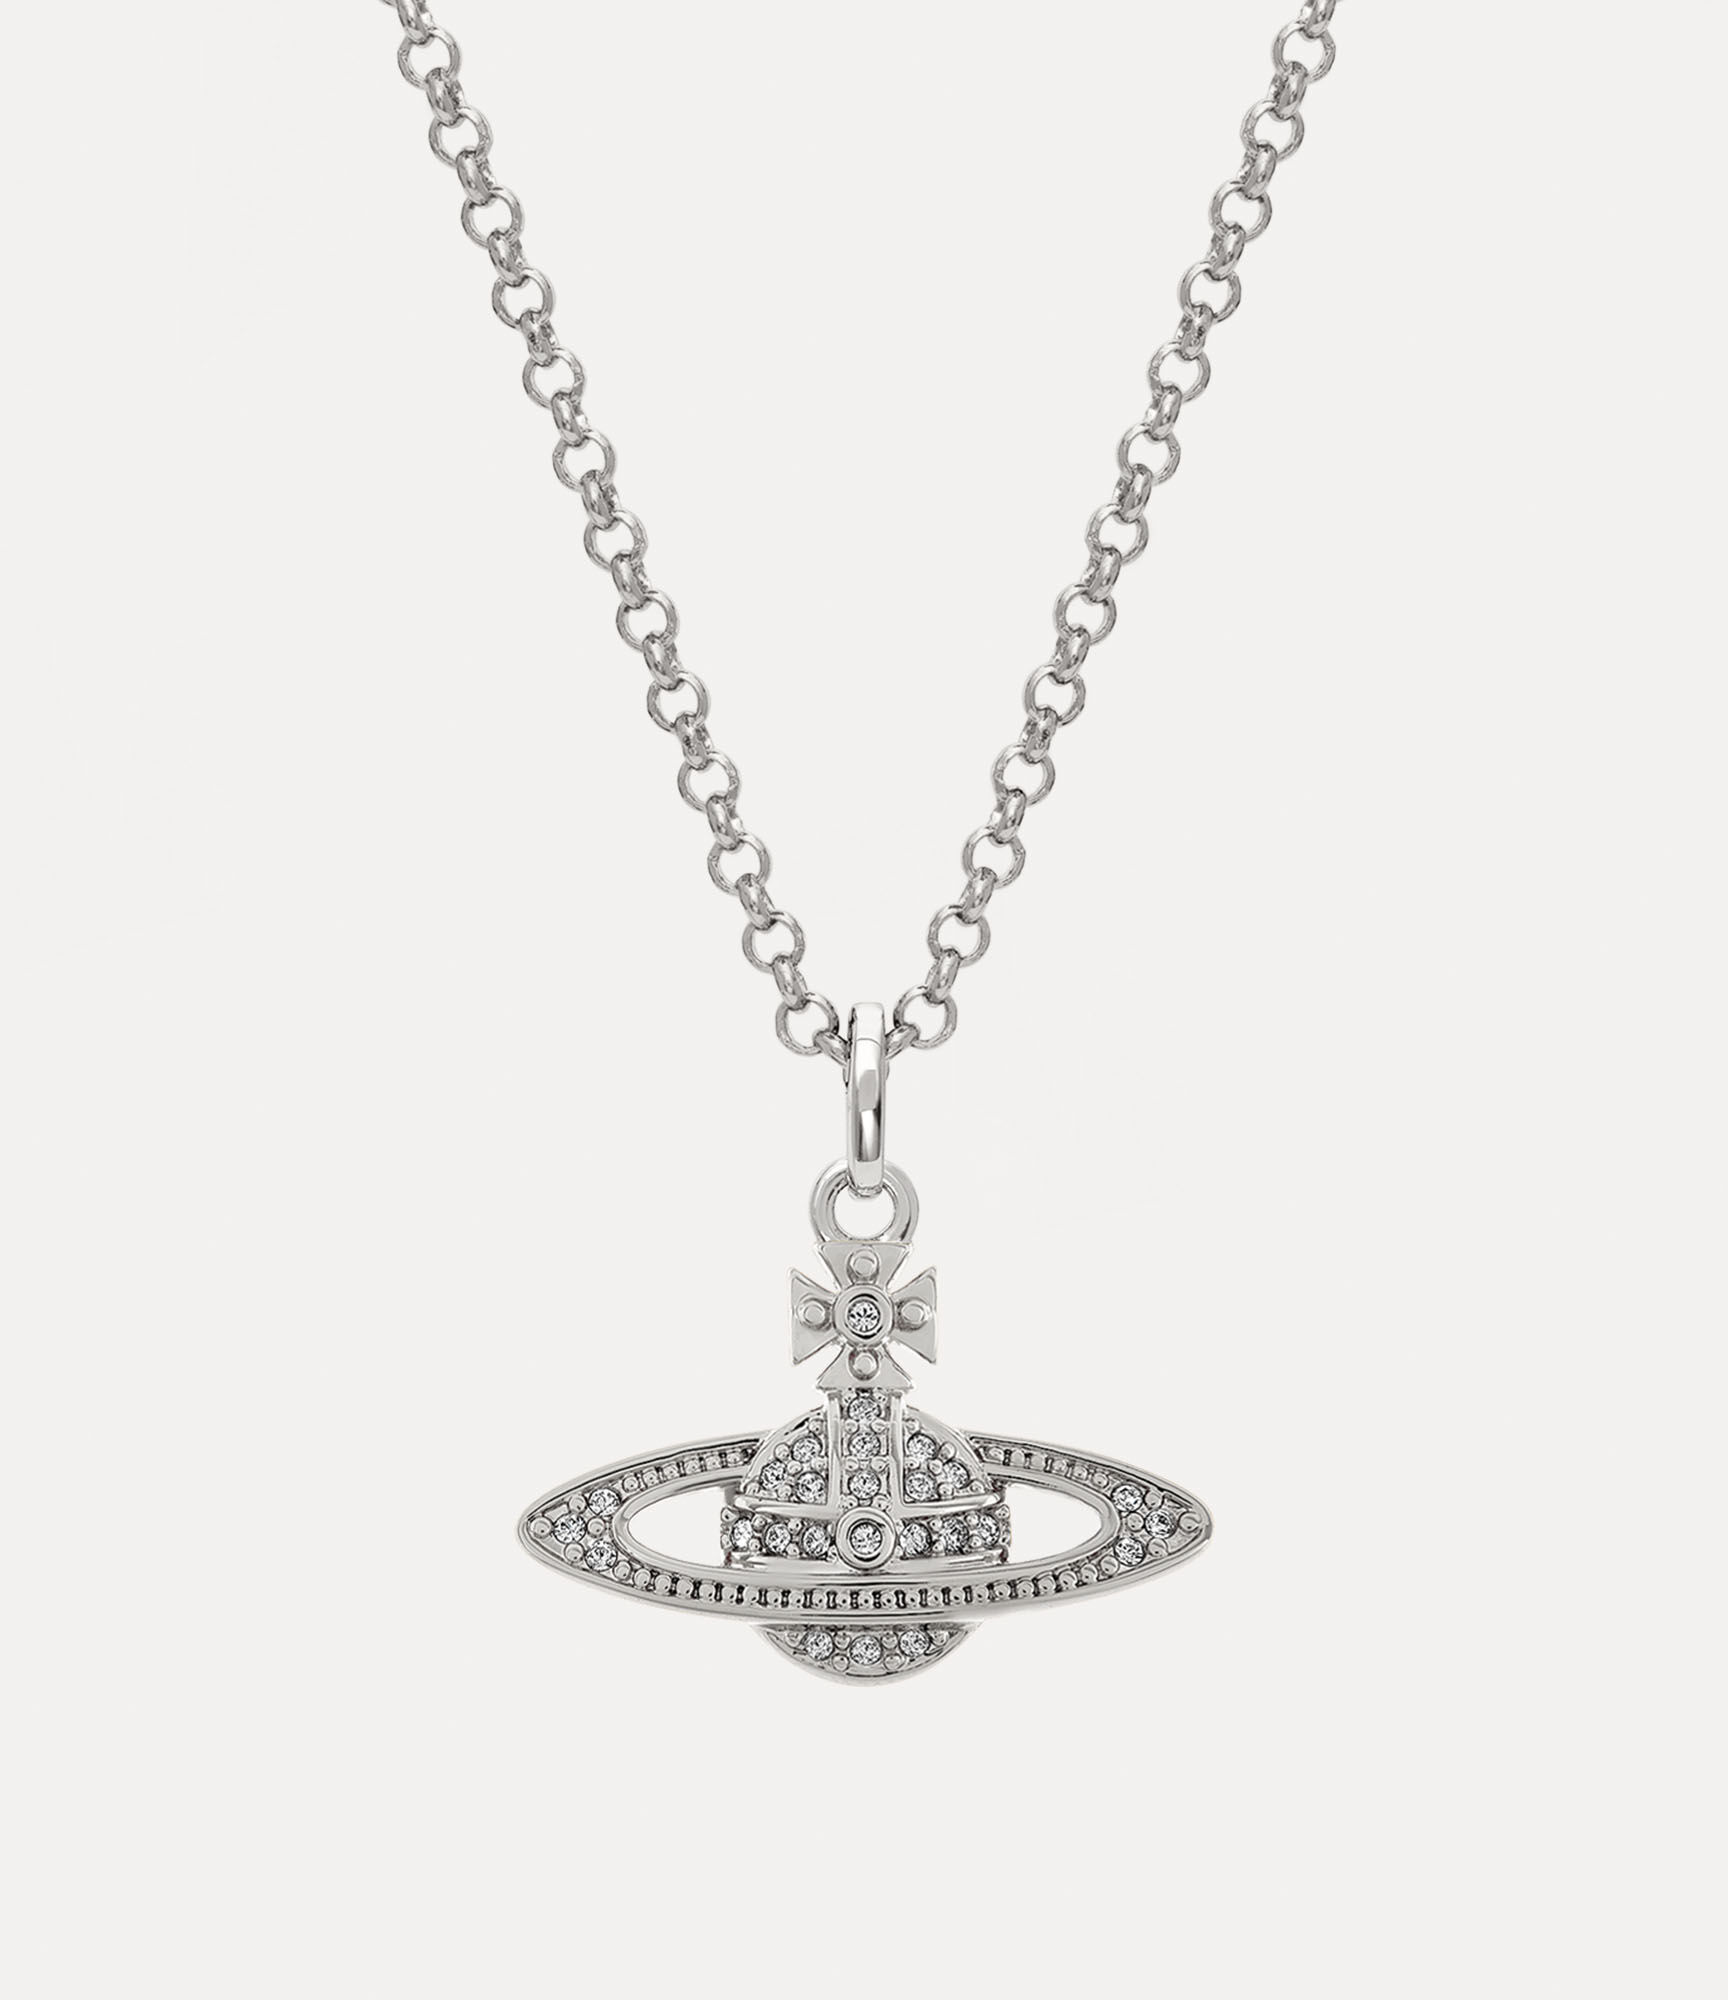 Vivienne Westwood Jewelryアクセサリー